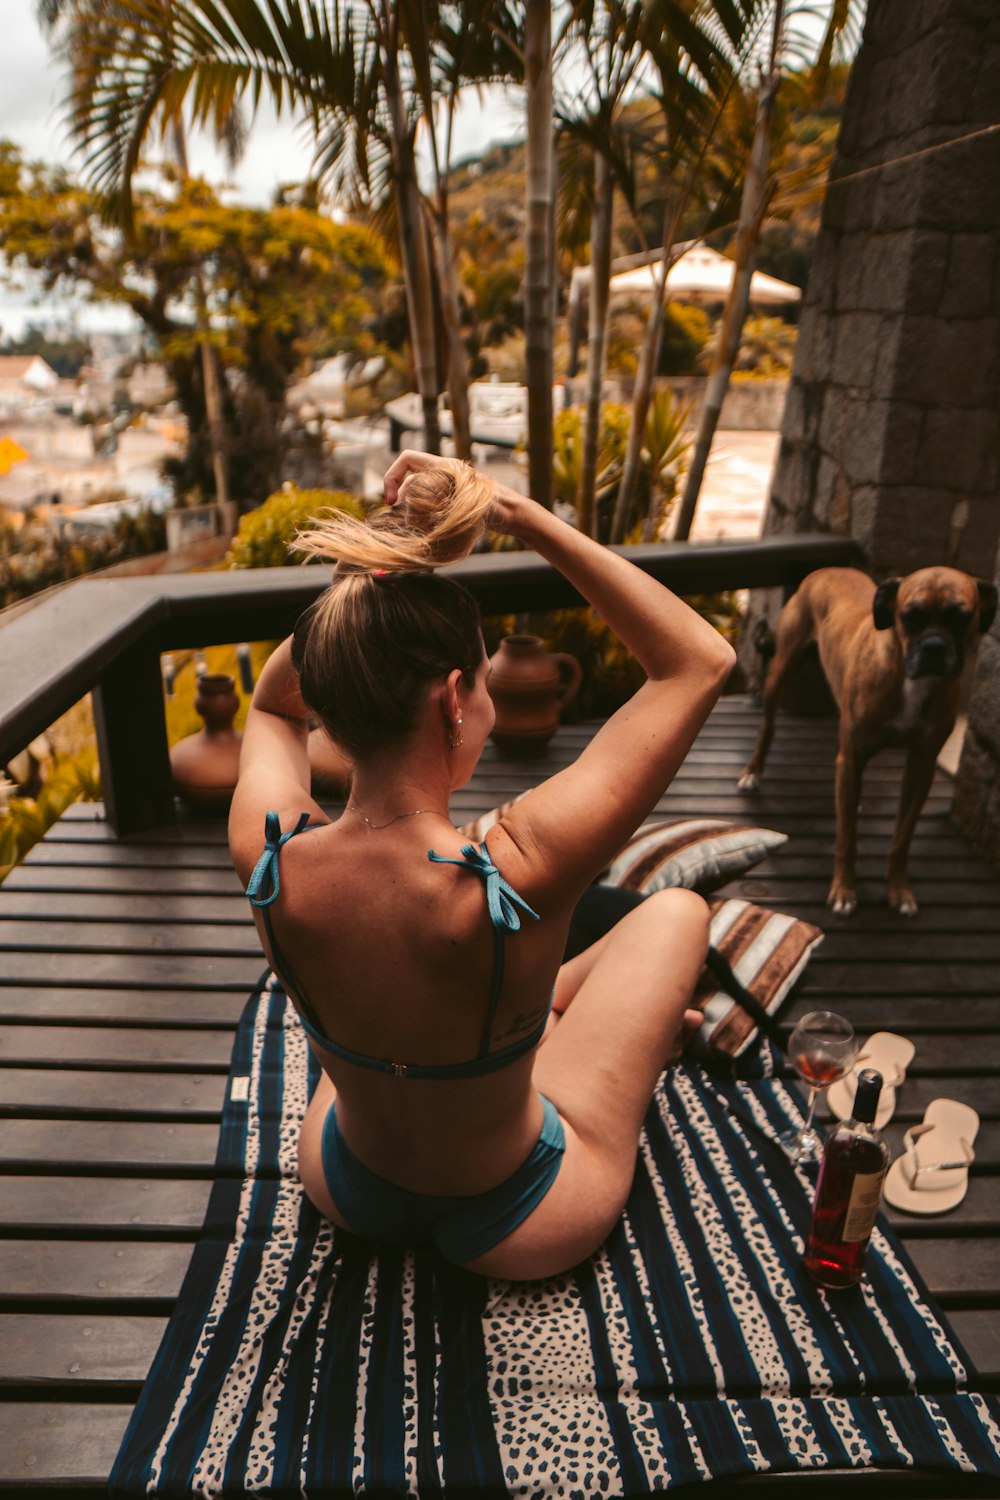 a woman in a bikini sitting on a deck next to a dog